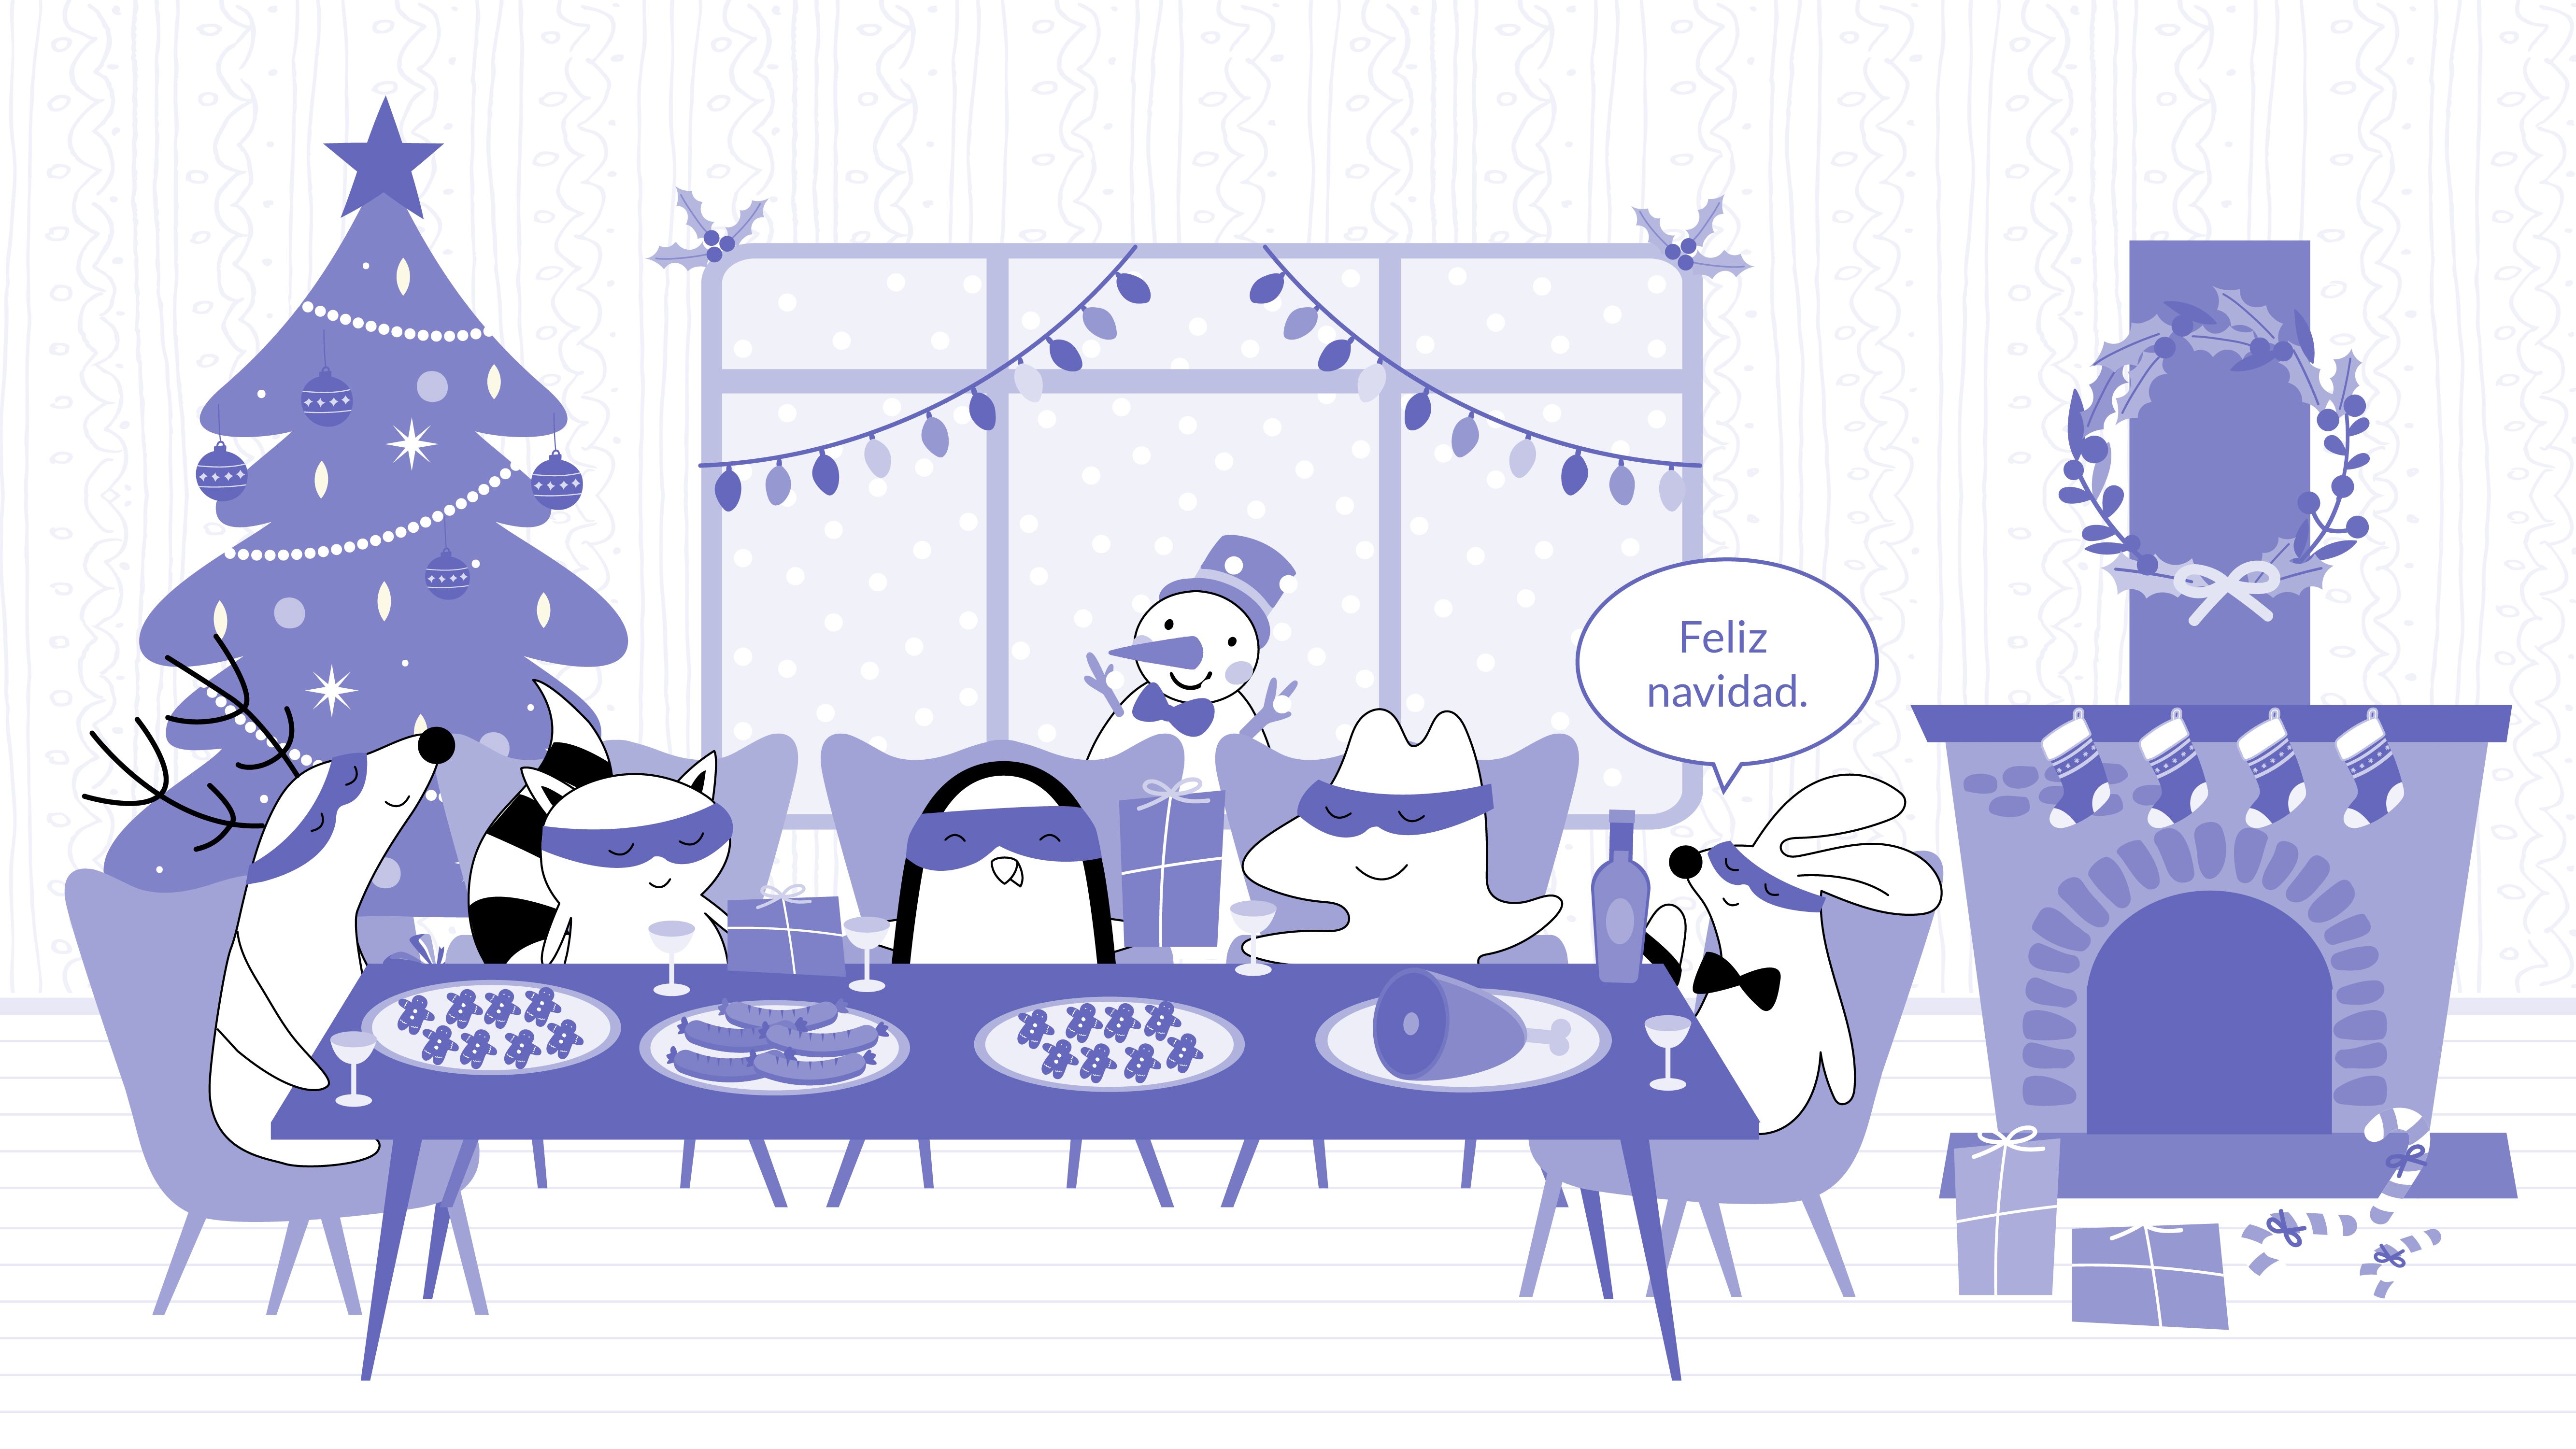 Soren, Pocky, Iggy, and Benji are celebrating Christmas at the table, Soren saying, “Feliz Navidad.”